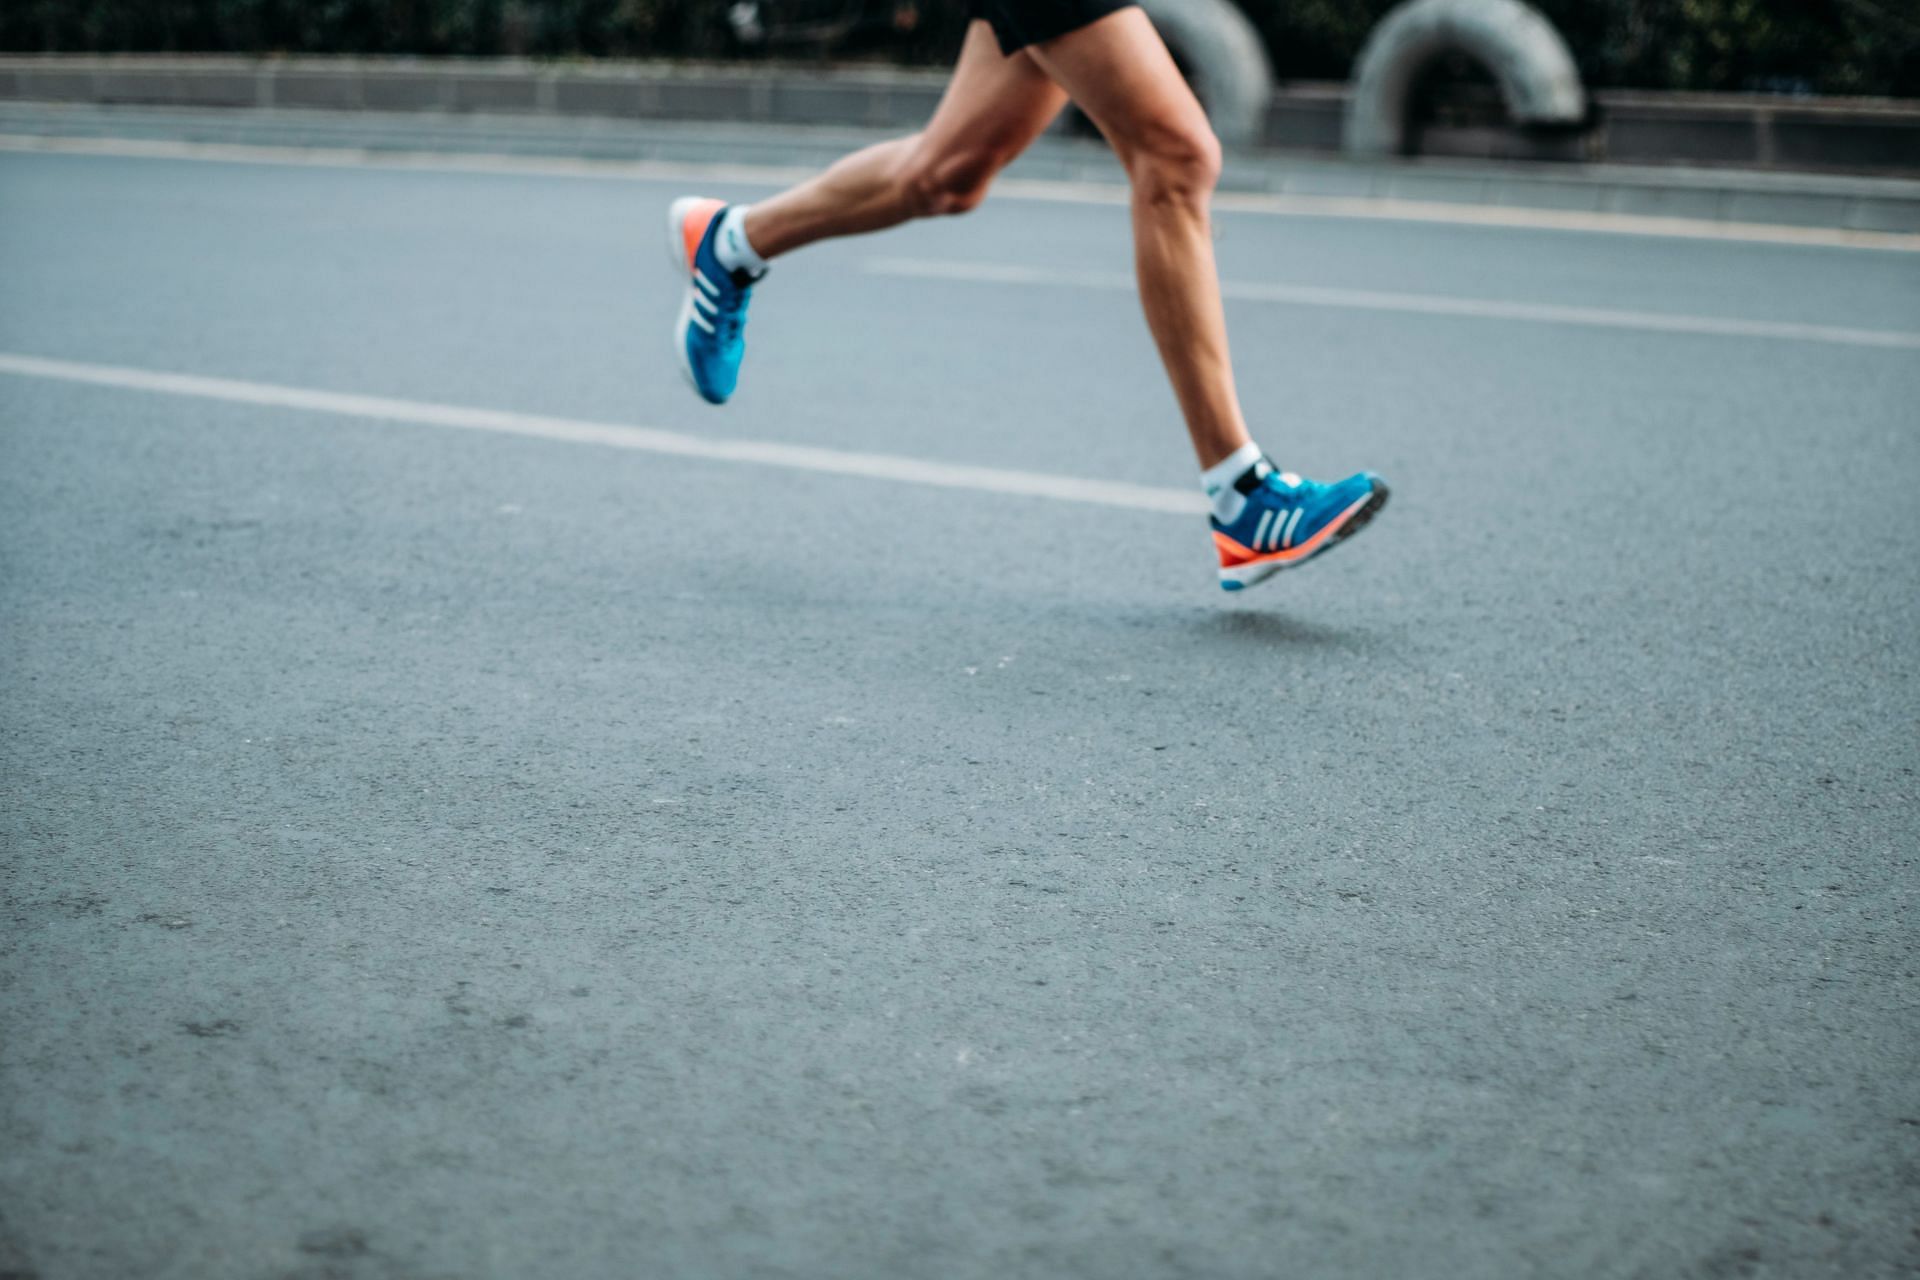 Strength training is important to prepare for half marathon race. (Image via Unsplash / Sporlab)